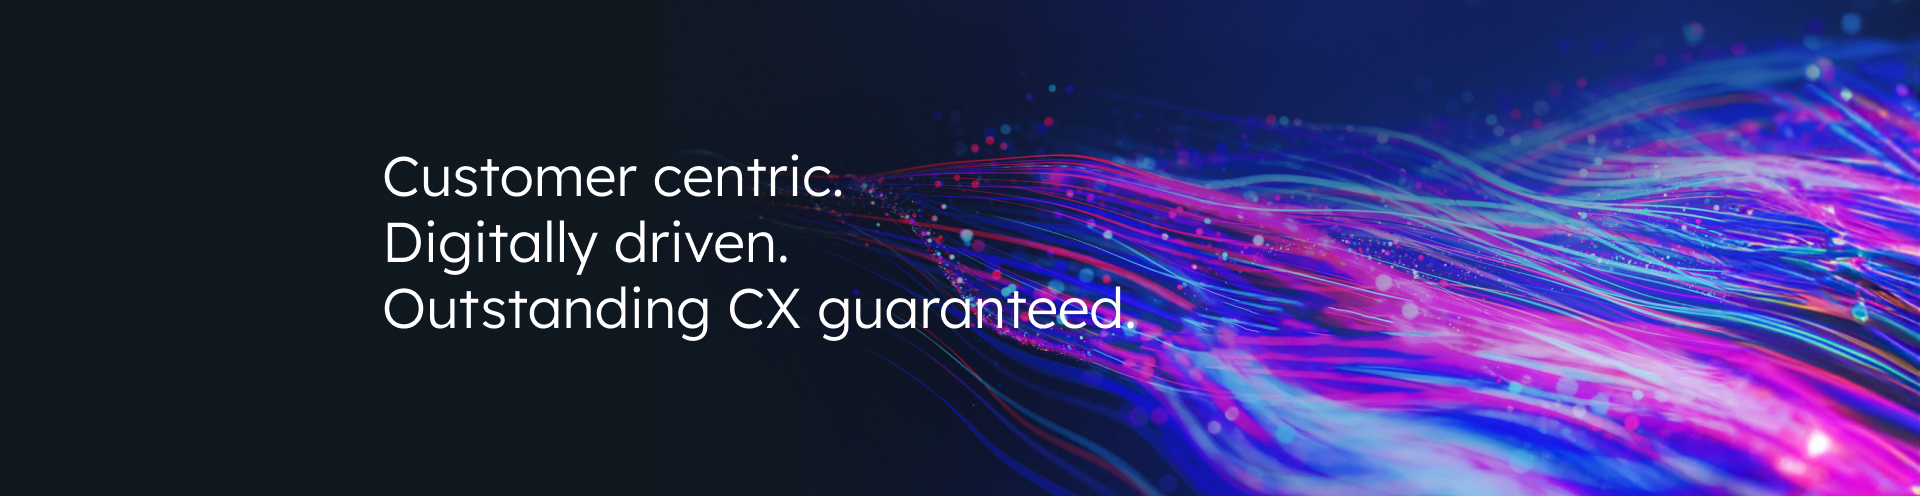 Customer centric. Digitally driven. Outstanding CX guaranteed.